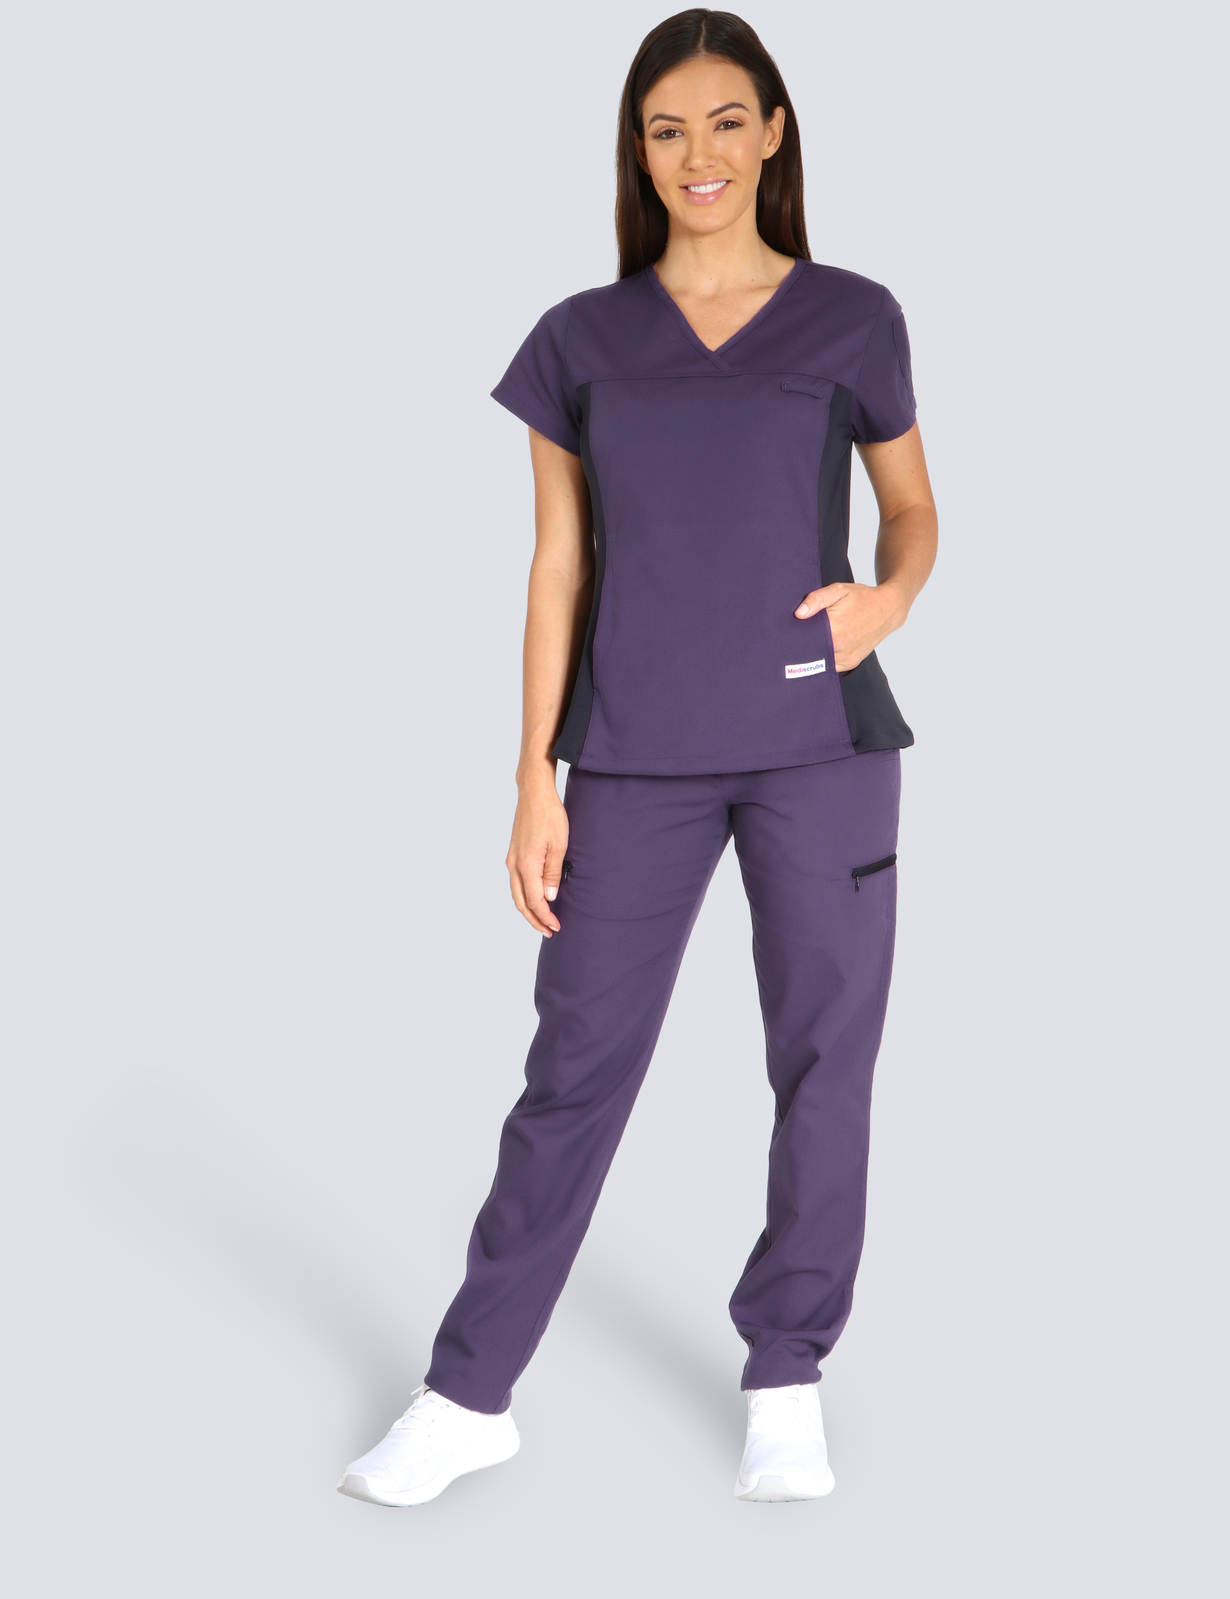 Toowoomba Hospital Pharmacist Uniform Set Bundle (Women's Fit Spandex Top and Cargo pants in Aubergine + Logo) 